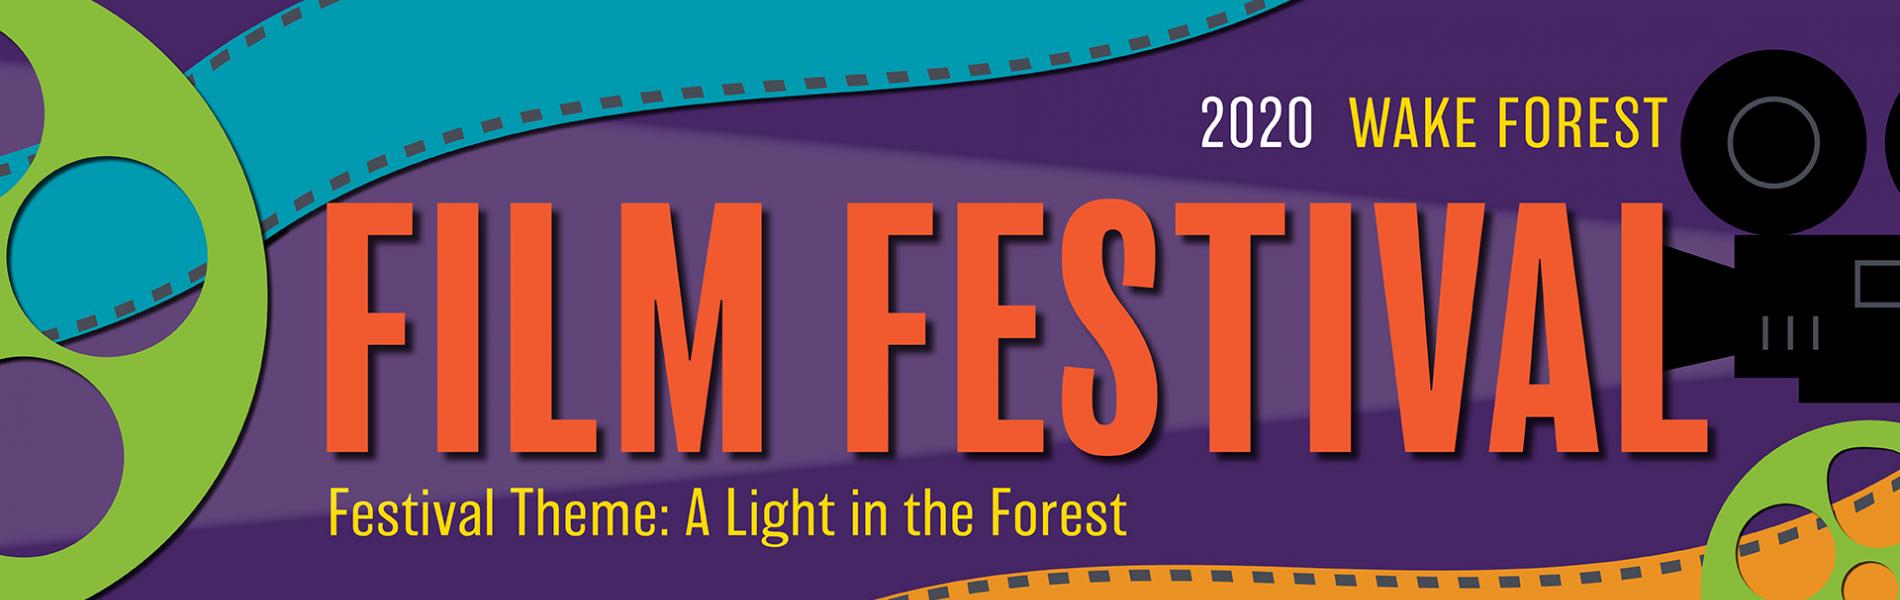 Wake Forest Film Festival